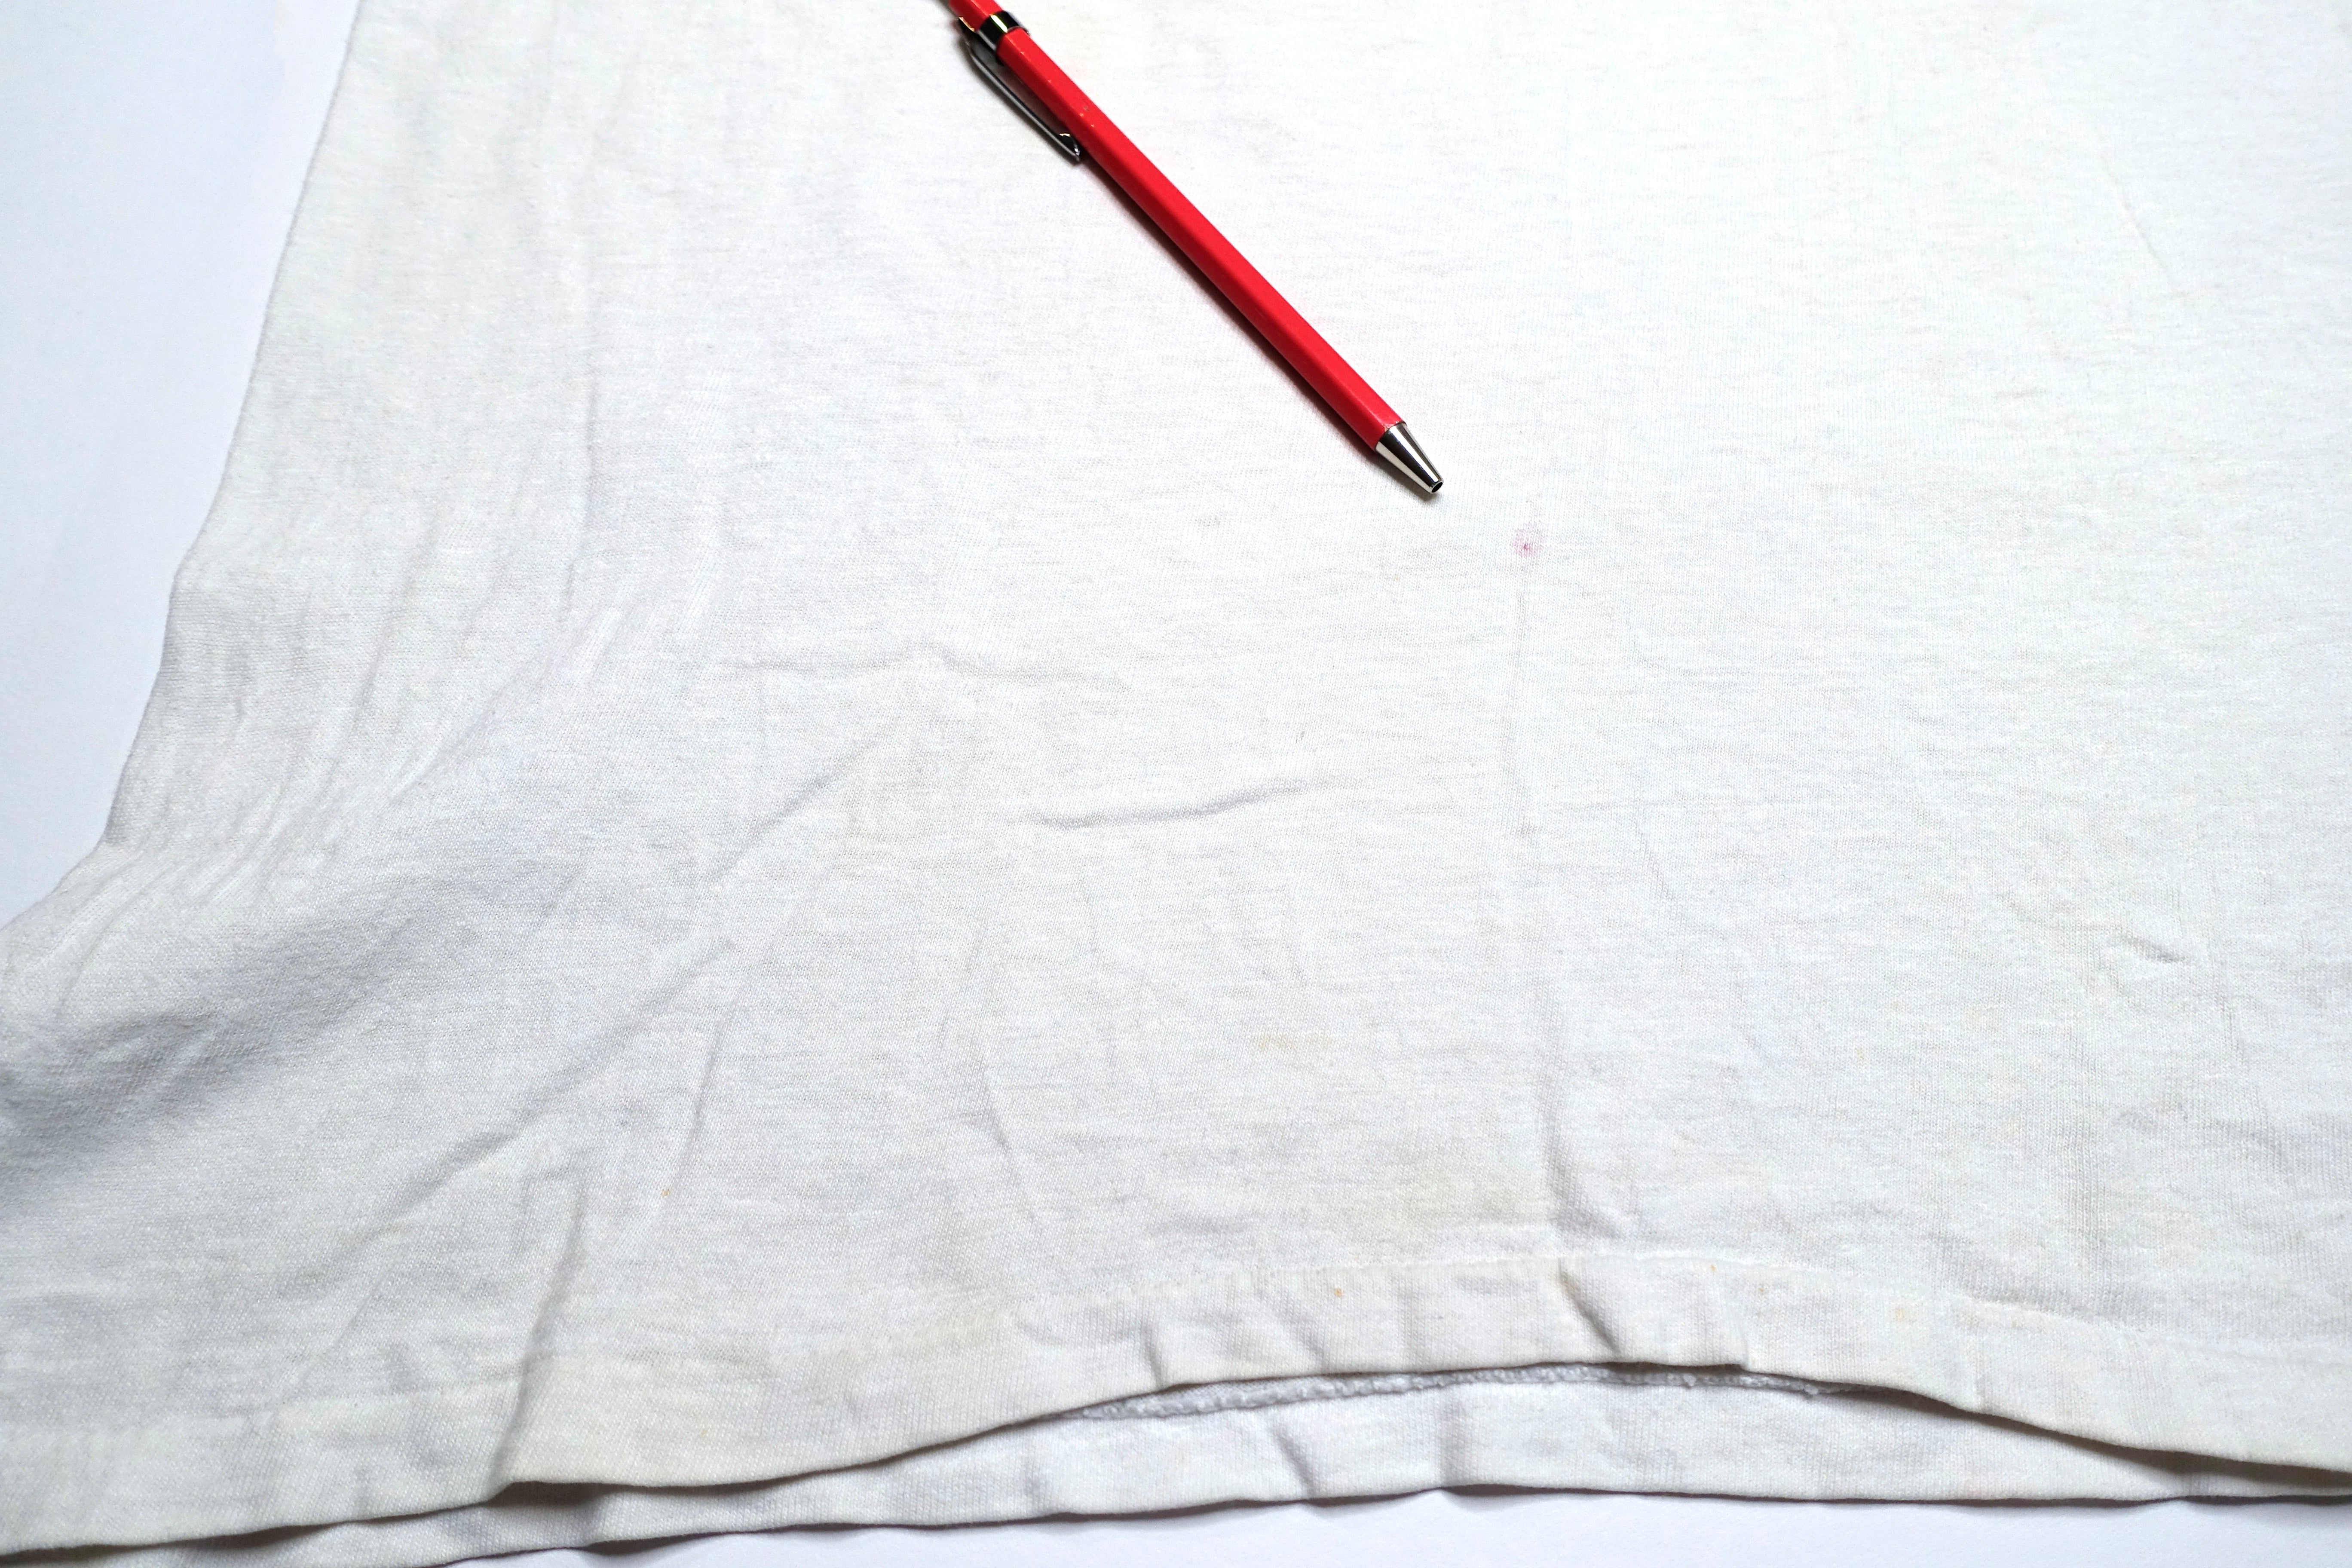 Rocket From The Crypt - Checkered Stripe Tour Shirt Size XL (White)